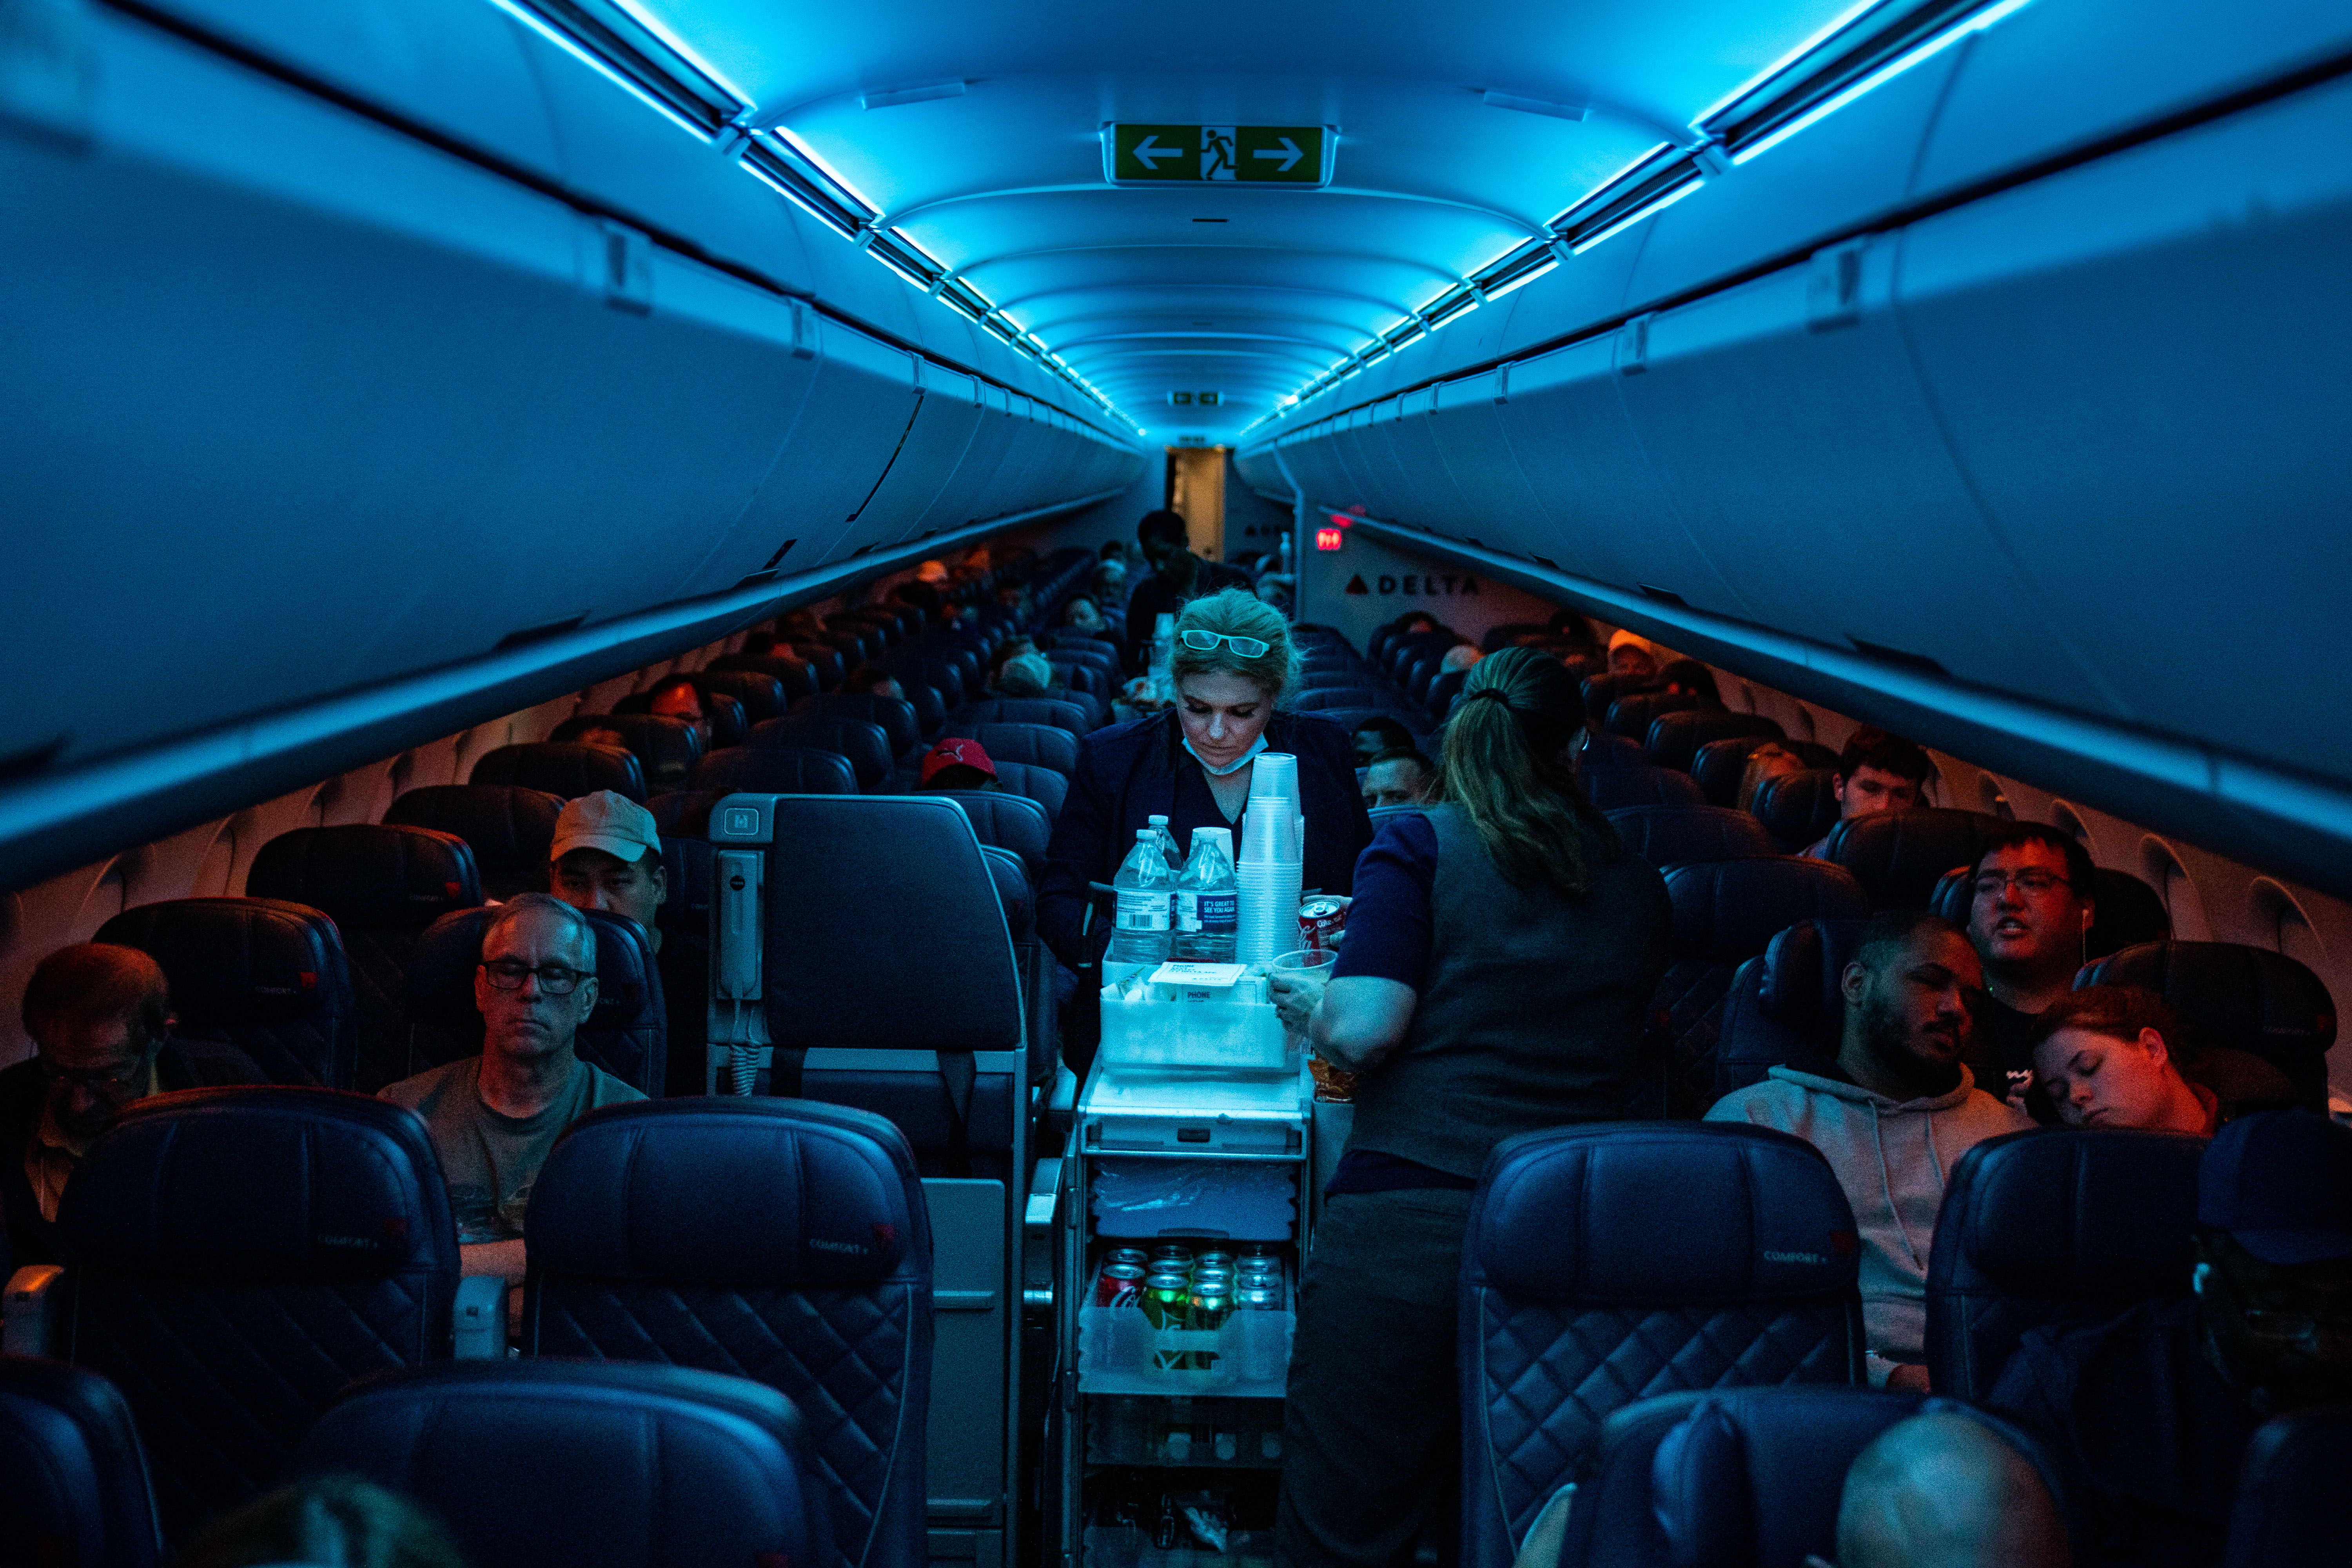 A flight attendant on a plane.